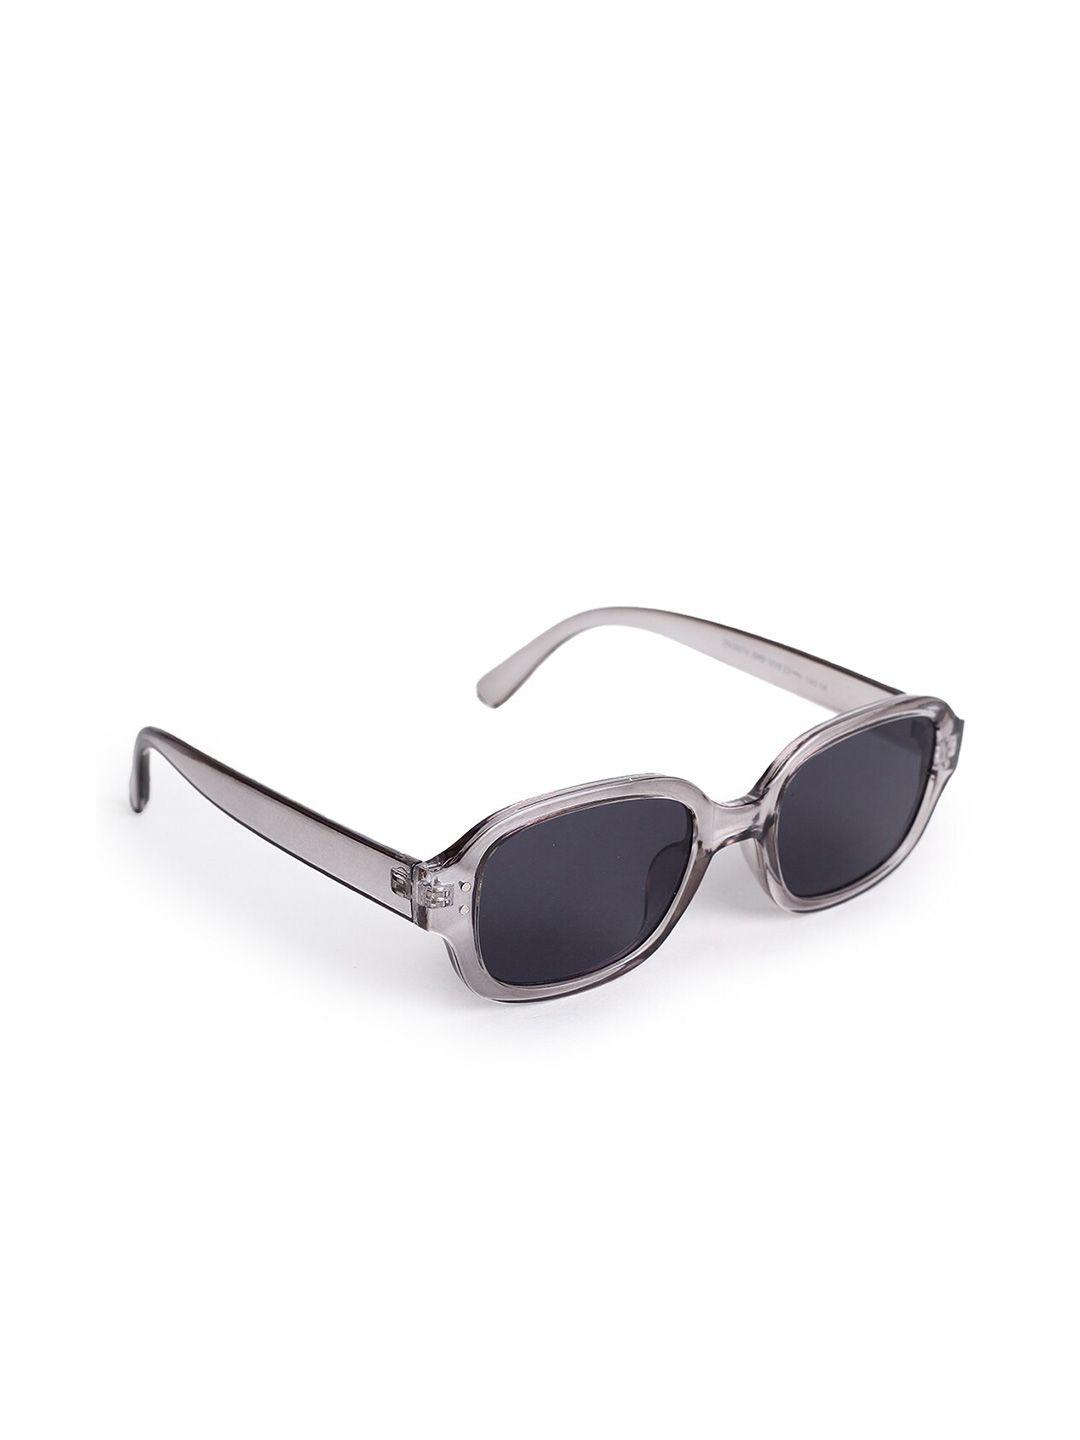 hashburys unisex black lens & gunmetal-toned oval sunglasses with uv protected lens